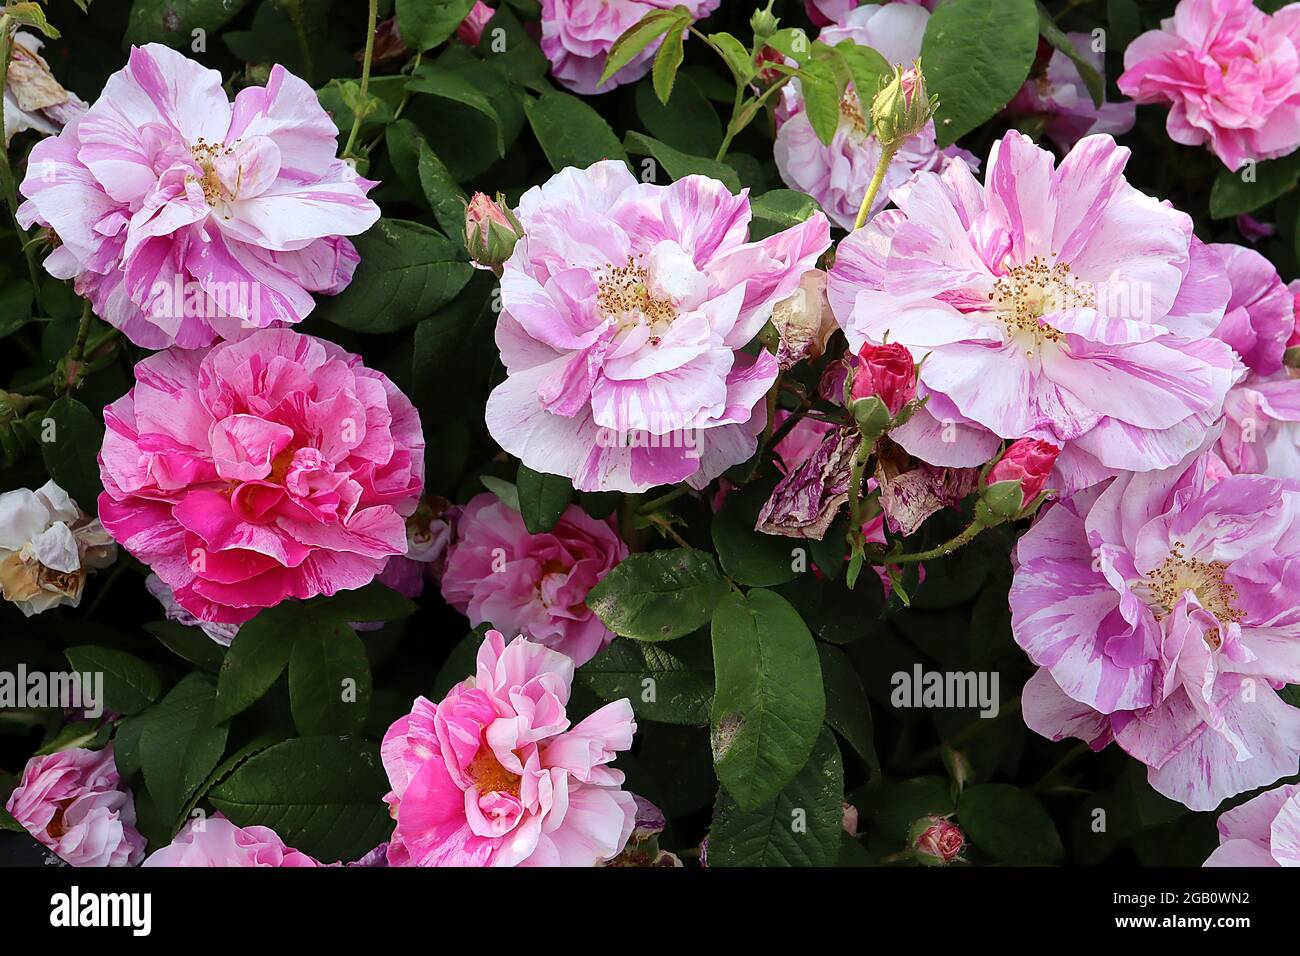 https://c8.alamy.com/compes/2gb0wn2/rosa-mundi-rosa-arbusto-rosa-gallica-versicolor-rosa-francesa-flores-blancas-semi-dobles-con-rayas-rosadas-y-rojas-junio-inglaterra-reino-unido-2gb0wn2.jpg